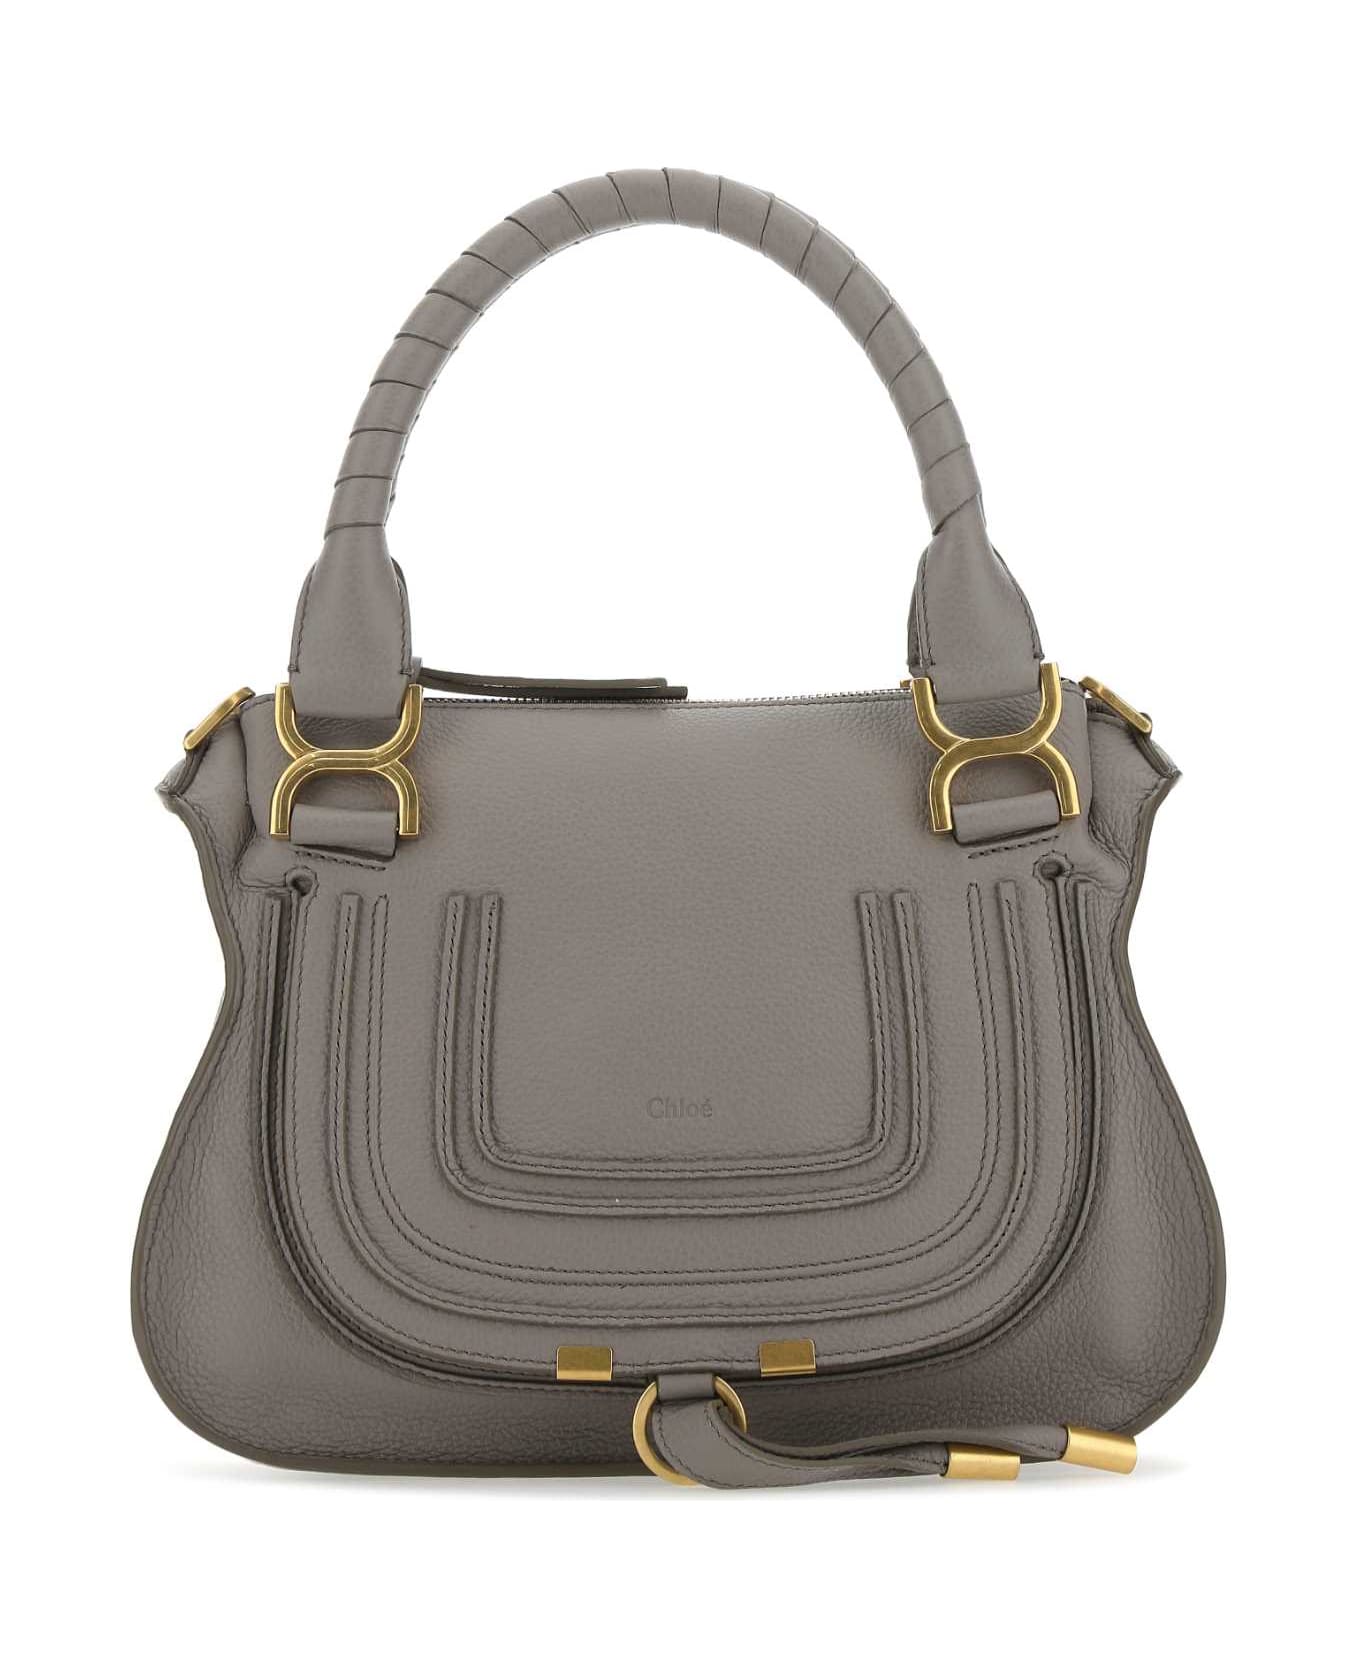 Chloé Grey Leather Small Marcie Handbag - 053